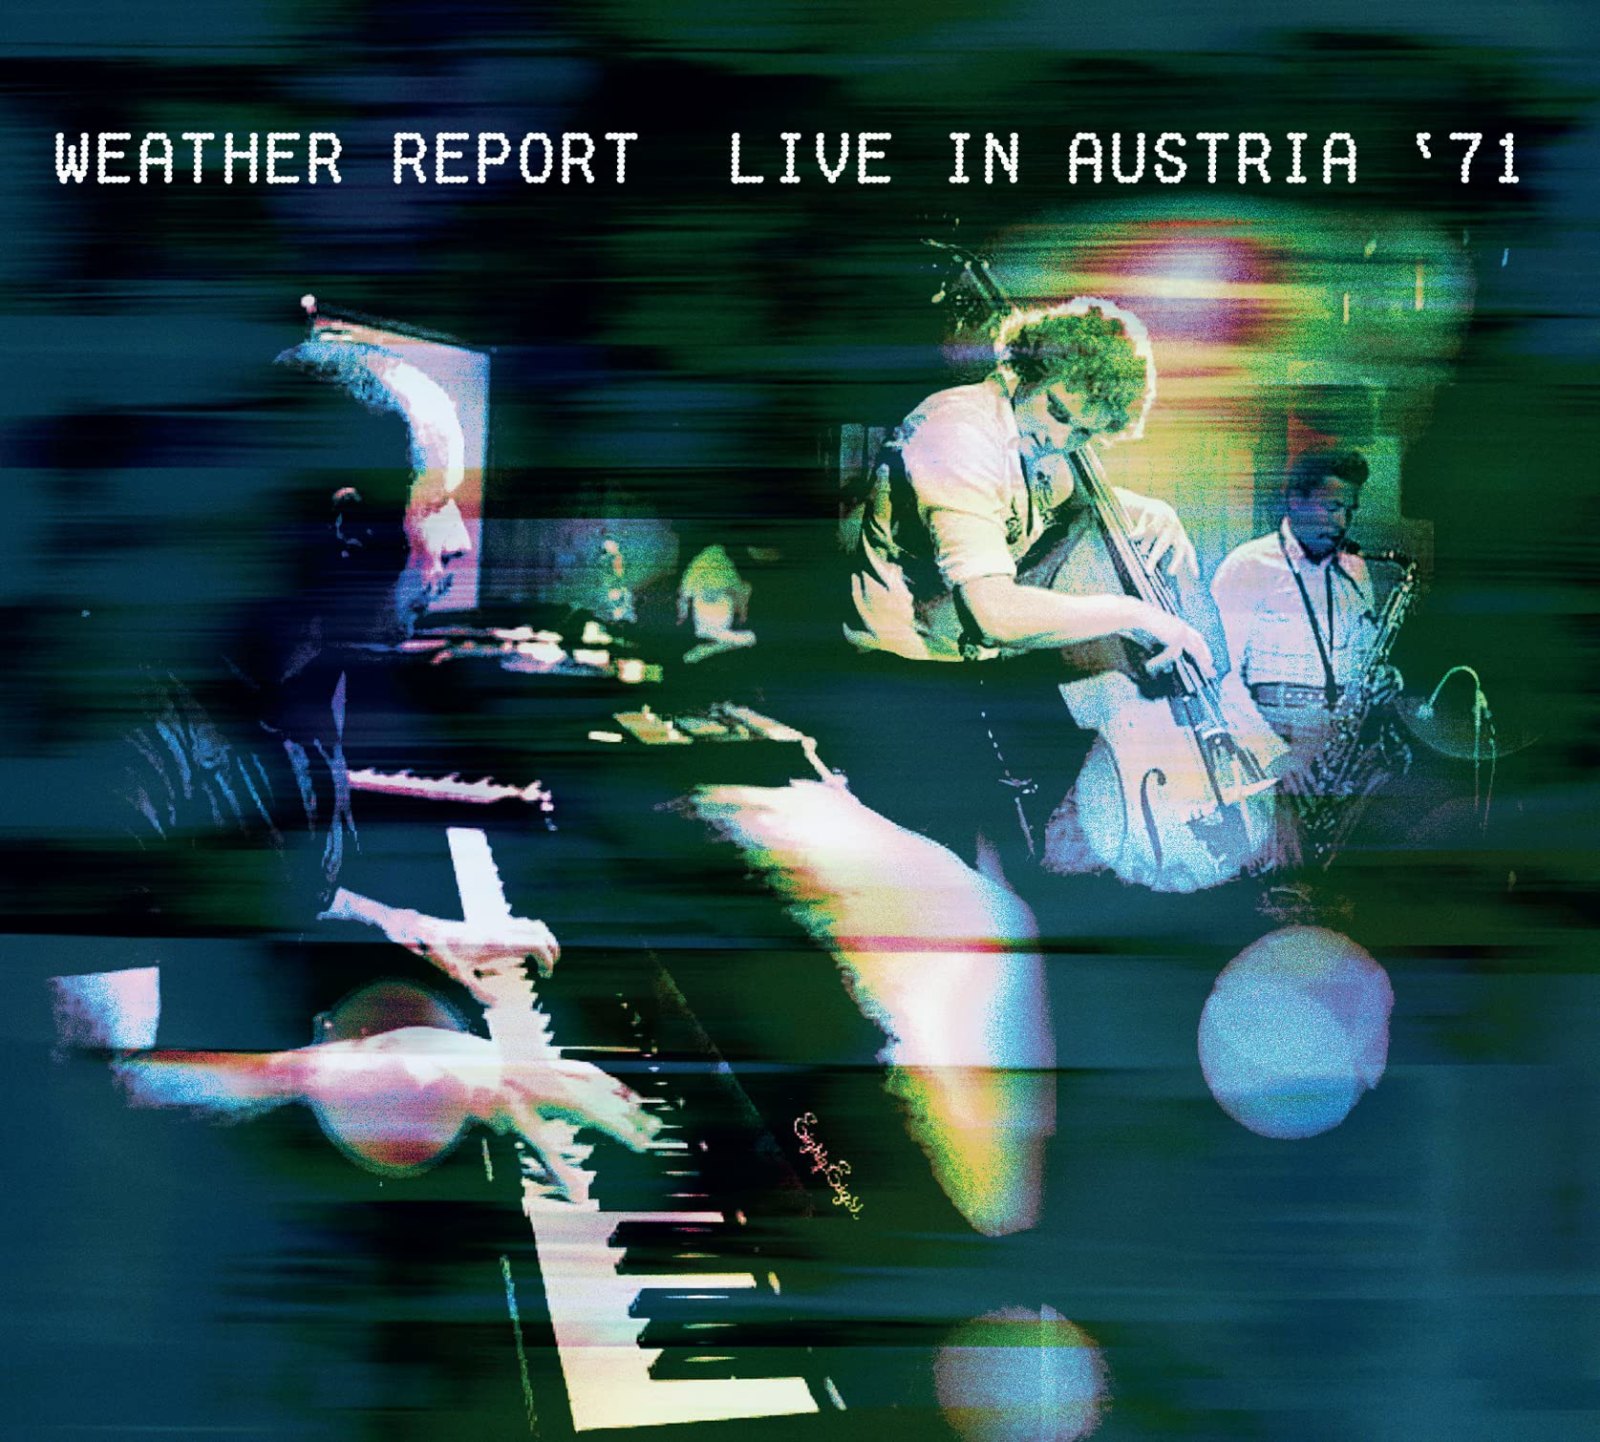 WEATHER REPORT - Live in Austria '71